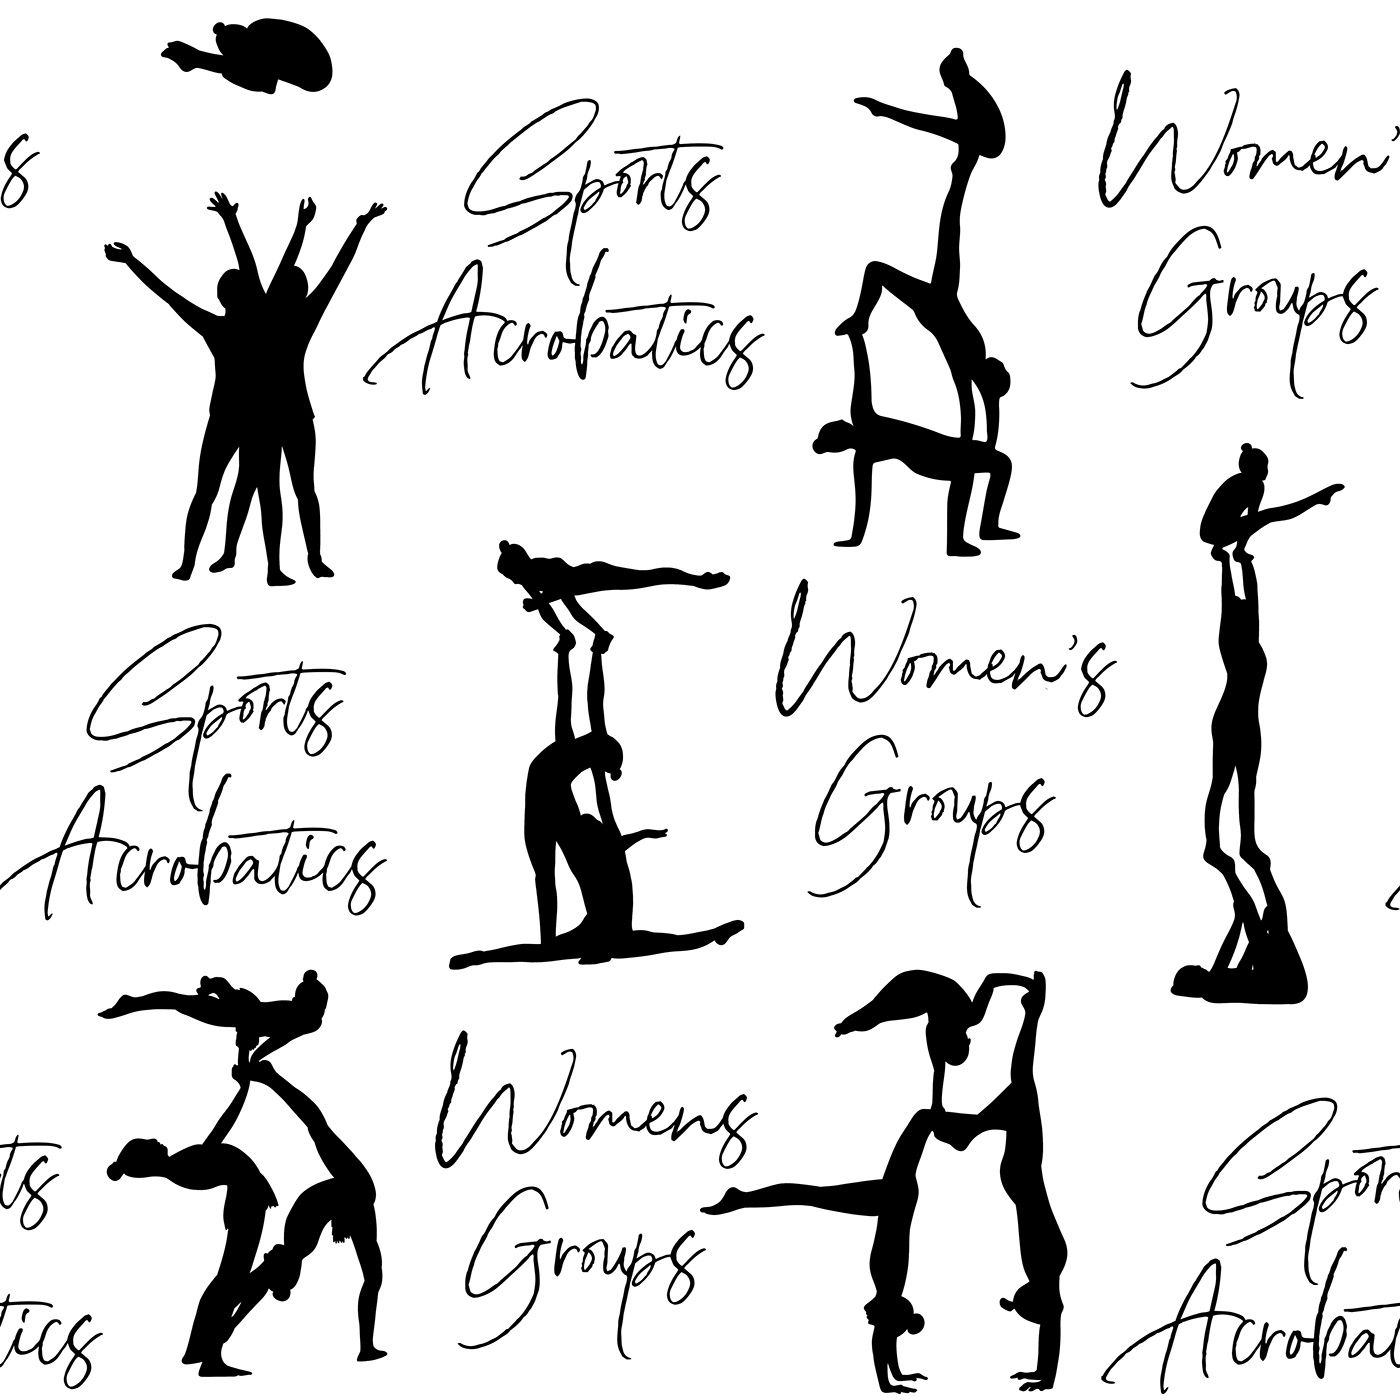 acrobat Acrobatic athletics balance dancing gymnast persons sketch sport Young